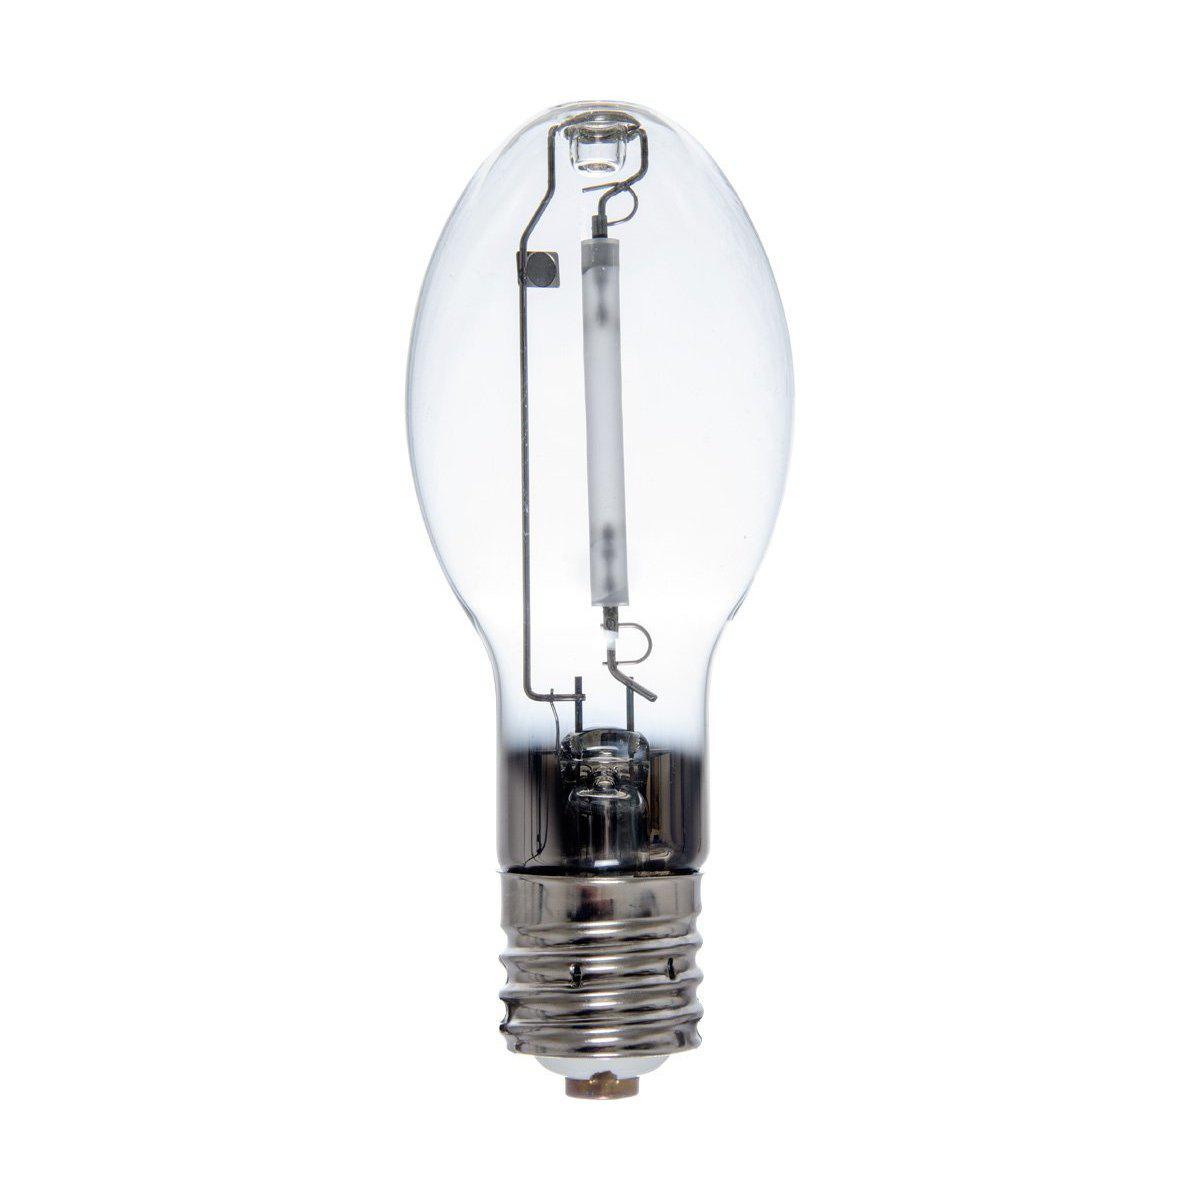 Lighting - High Pressure Sodium (HPS) Replacement Lamp for Mini Sunburst, 150W (T15 Shape, E39 Base) - 638104008204- Gardin Warehouse